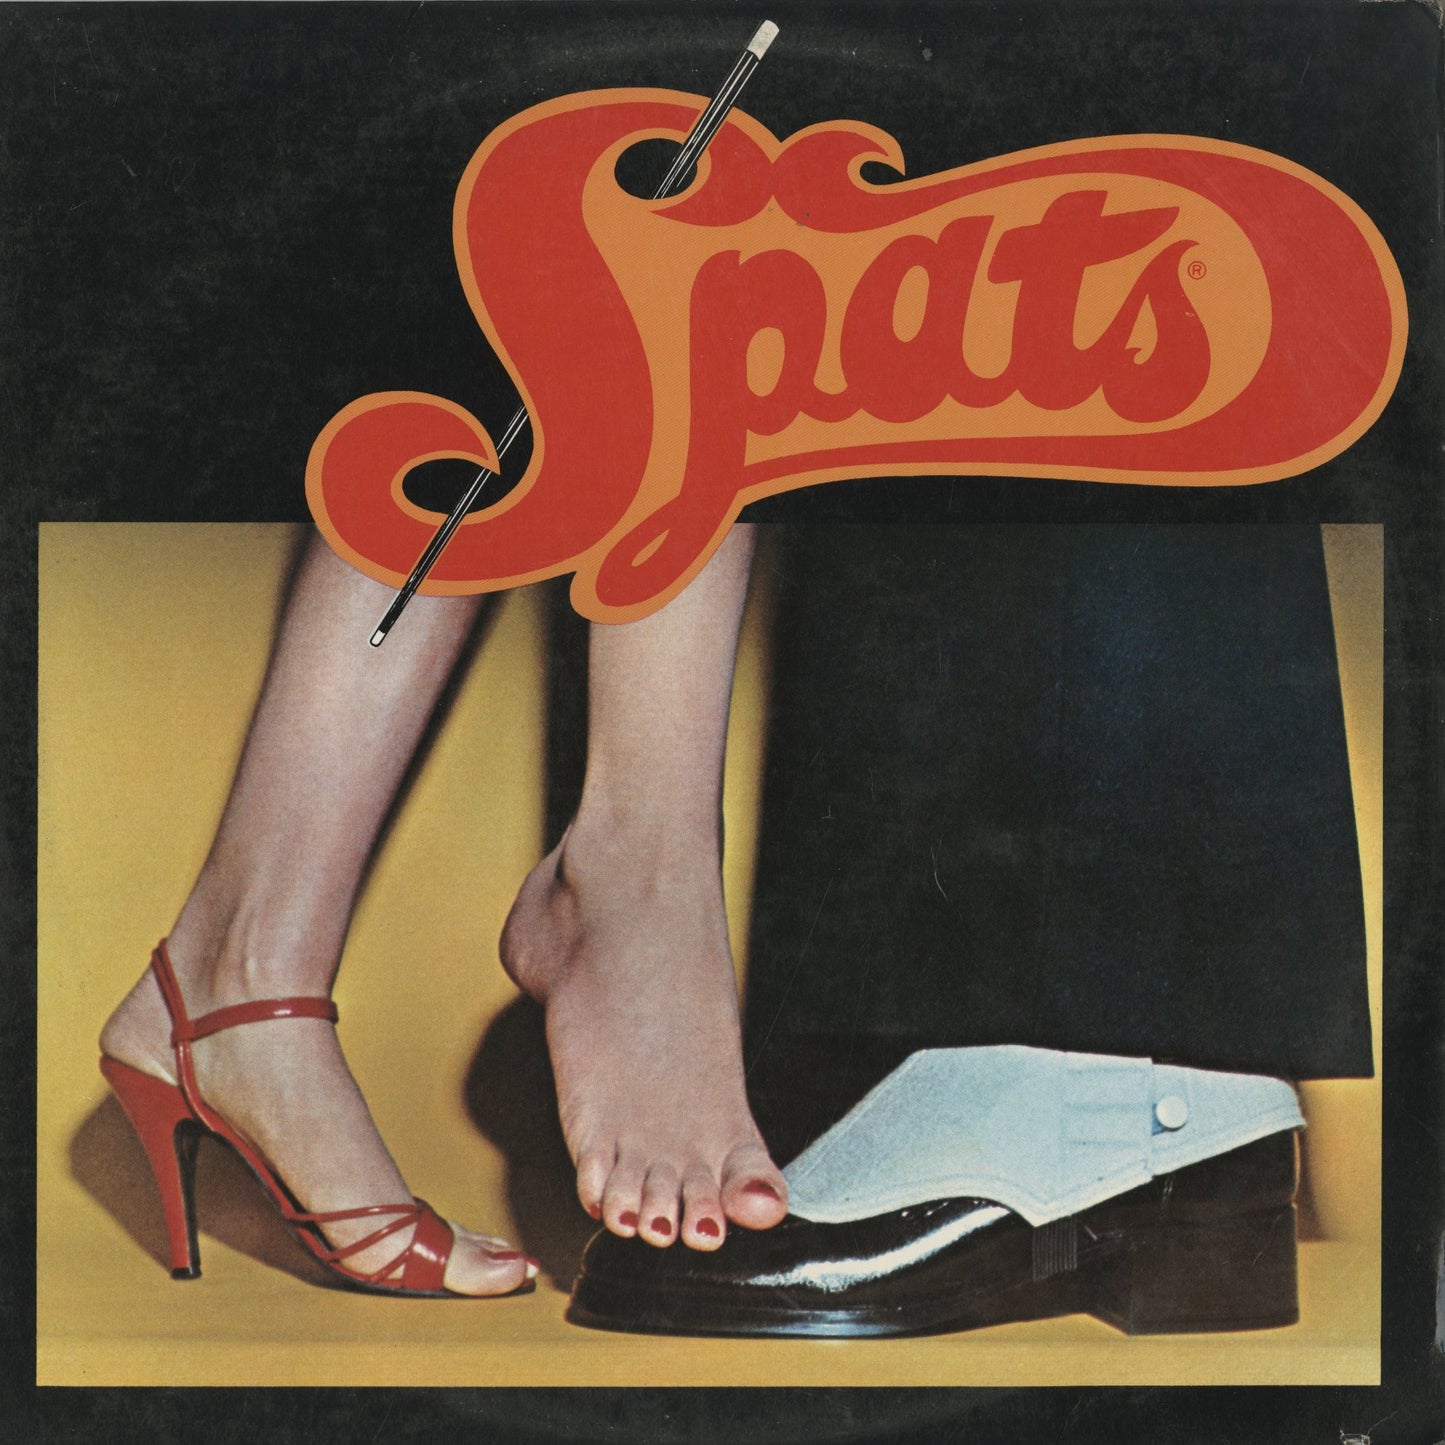 Spats / スパッツ / Spats (GS104)